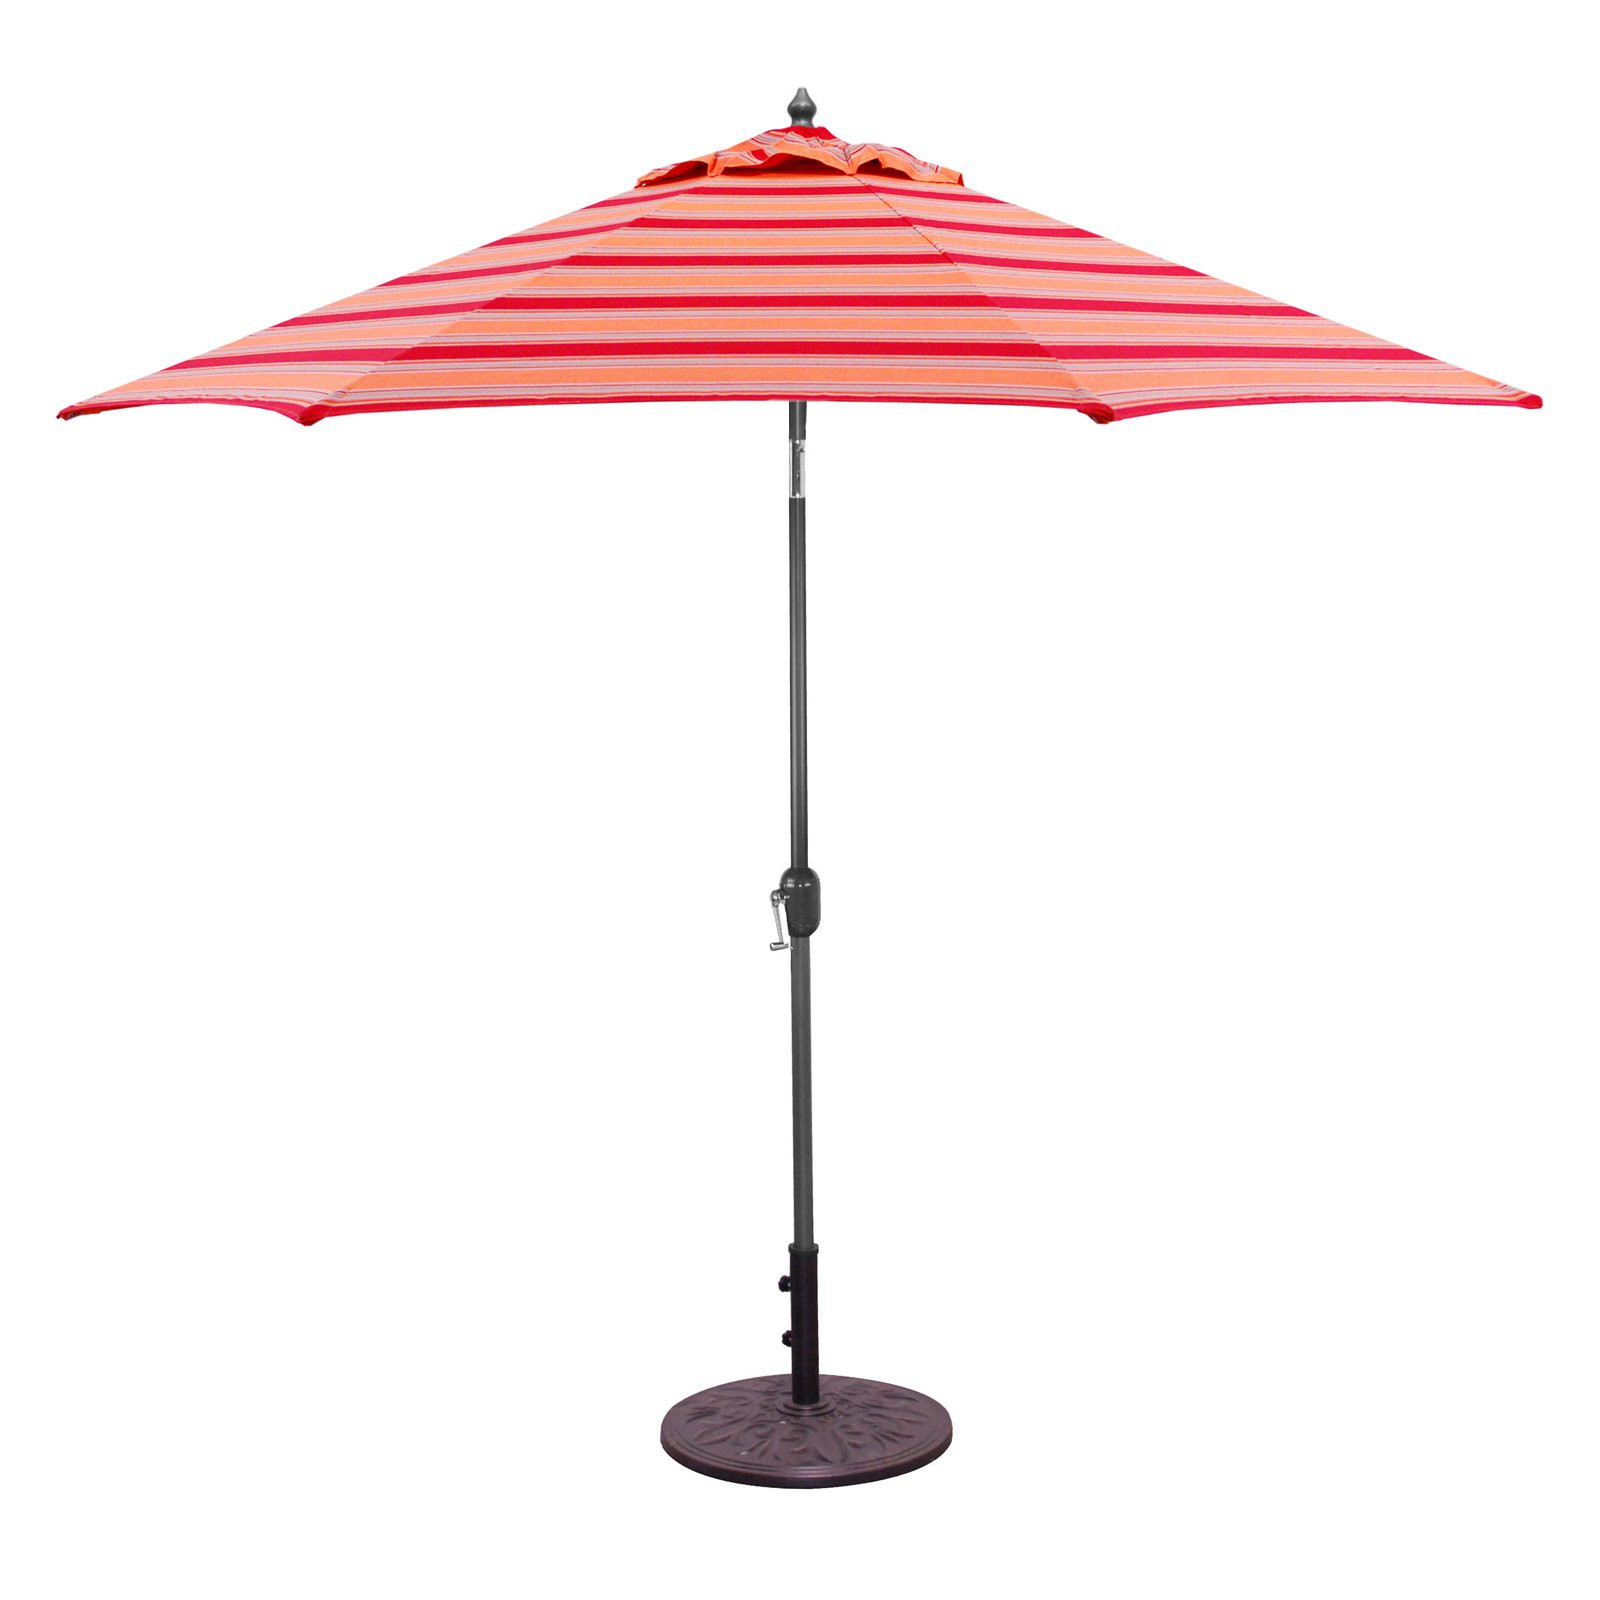 Best ideas about Sunbrella Patio Umbrellas
. Save or Pin Galtech 9 ft Sunbrella Aluminum Patio Umbrella Walmart Now.